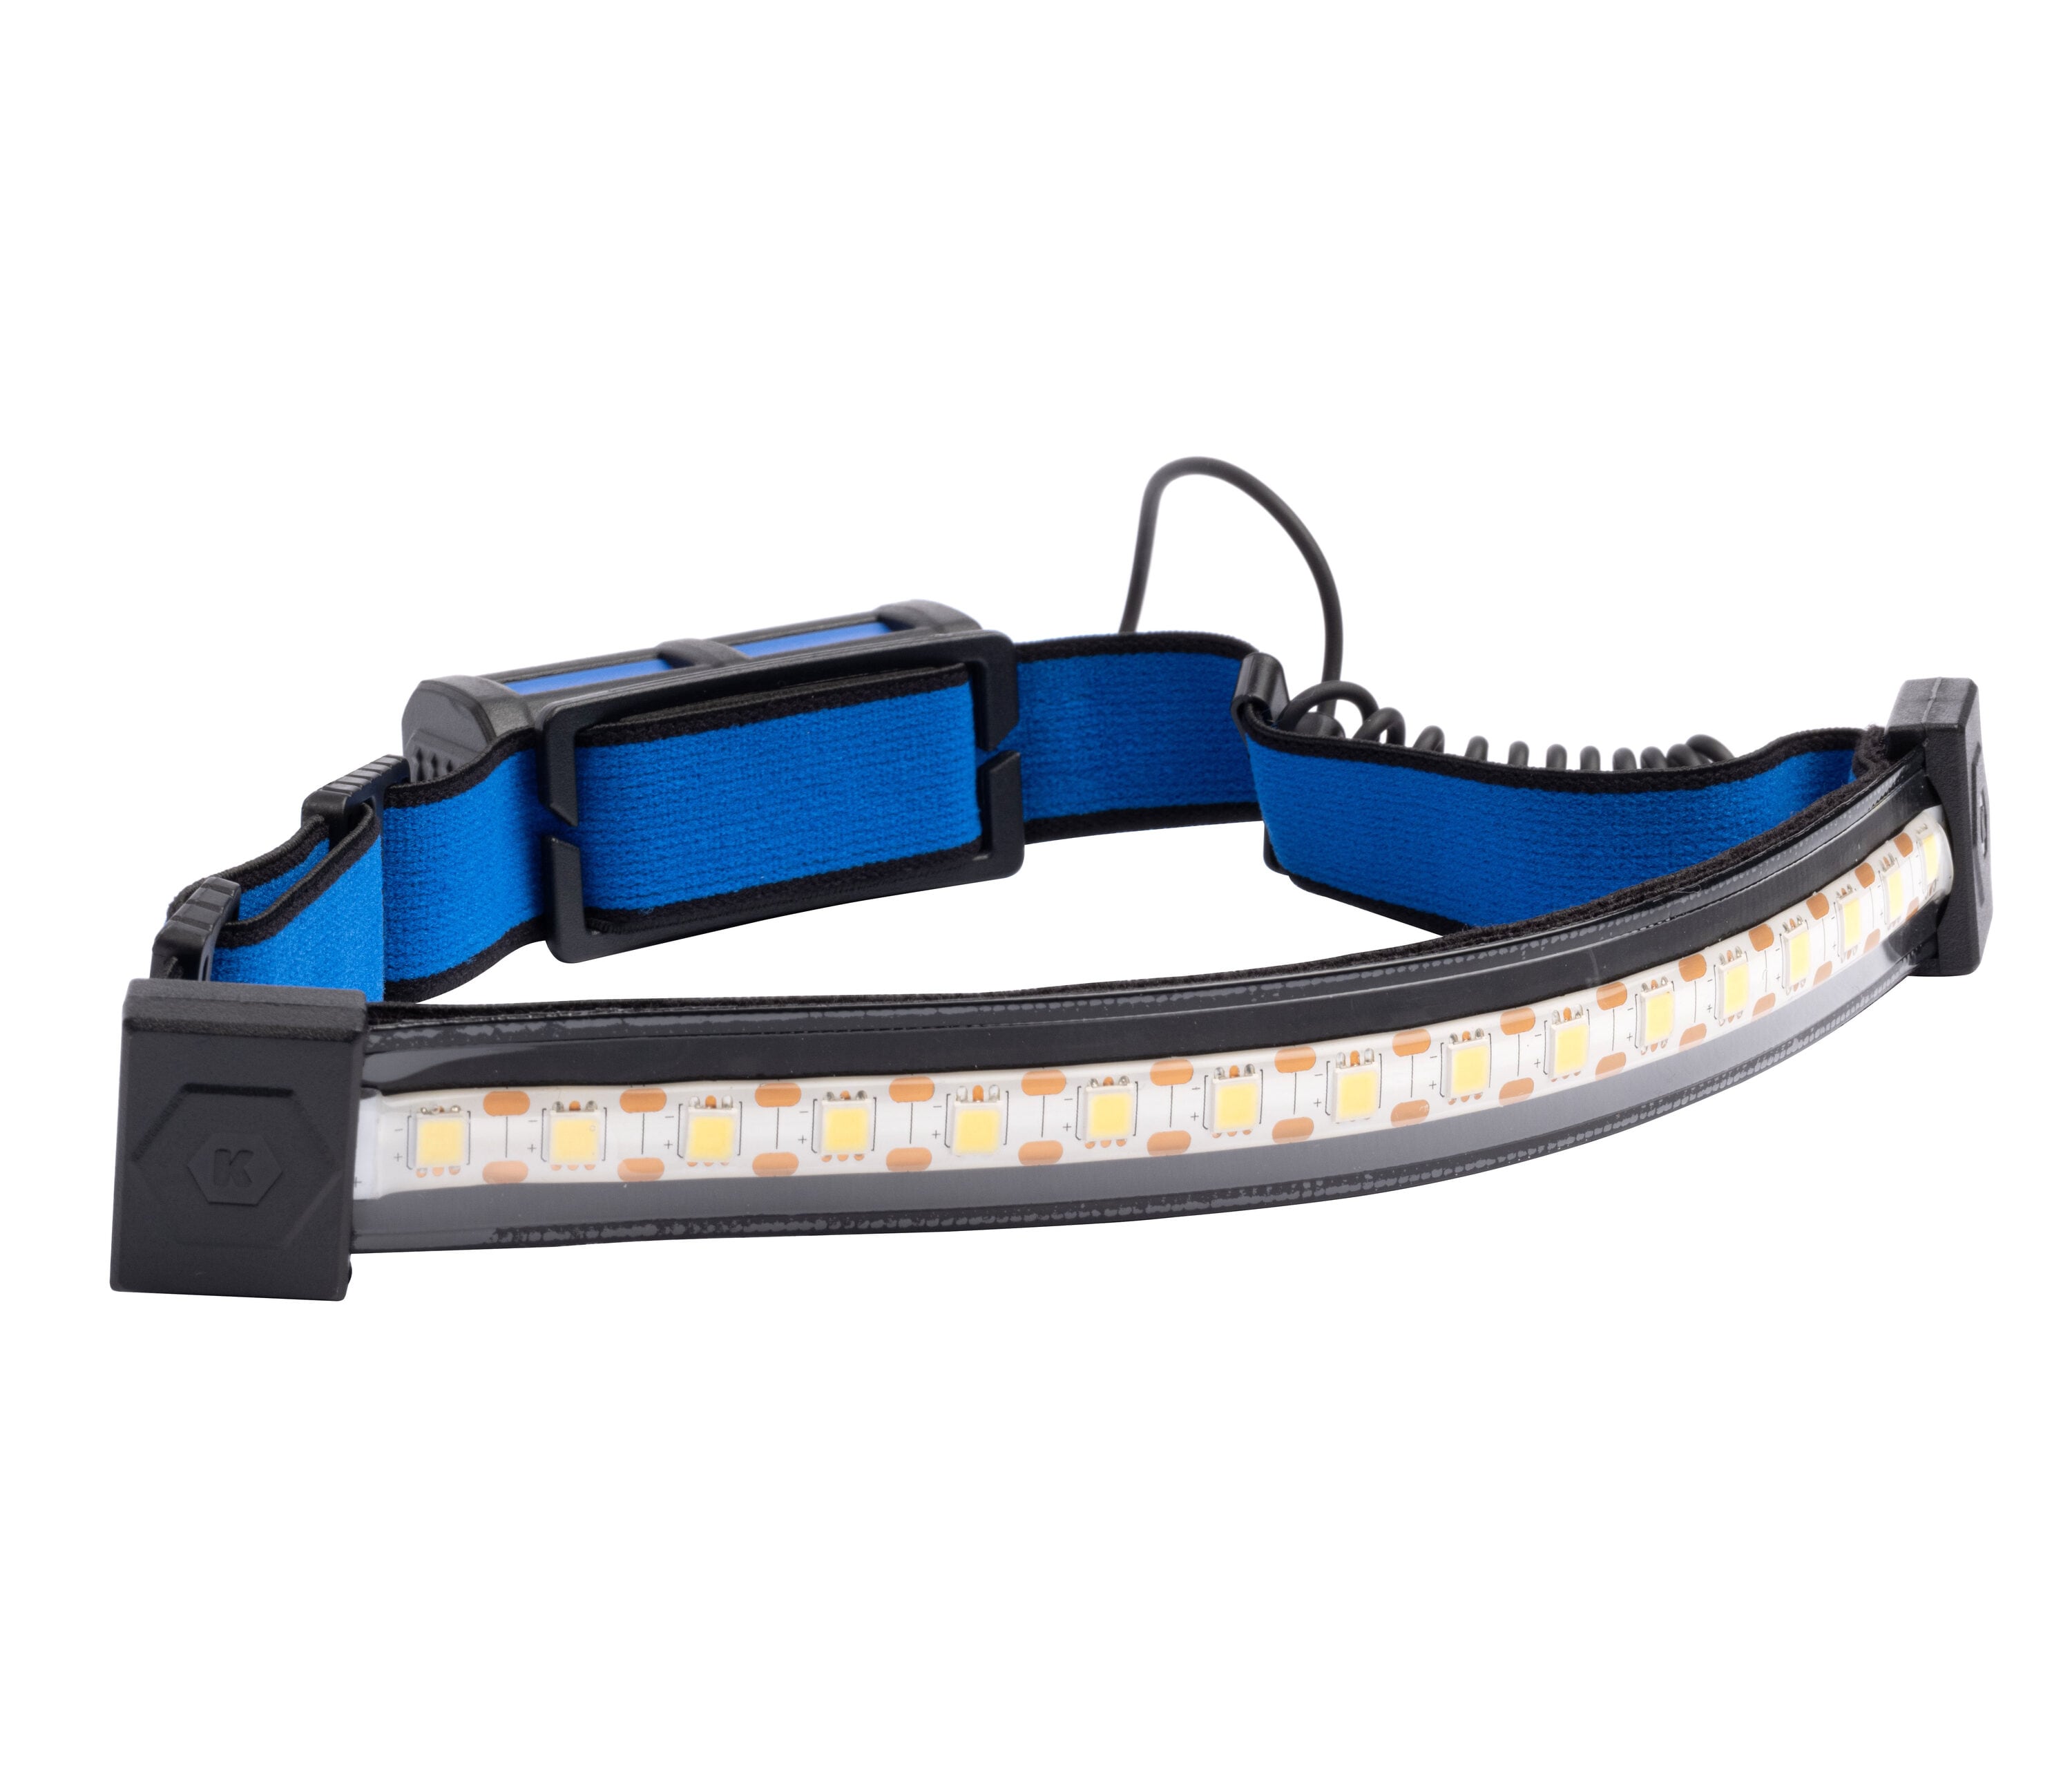 Kobalt 400-Lumen LED Rechargeable Headlamp in the Headlamps